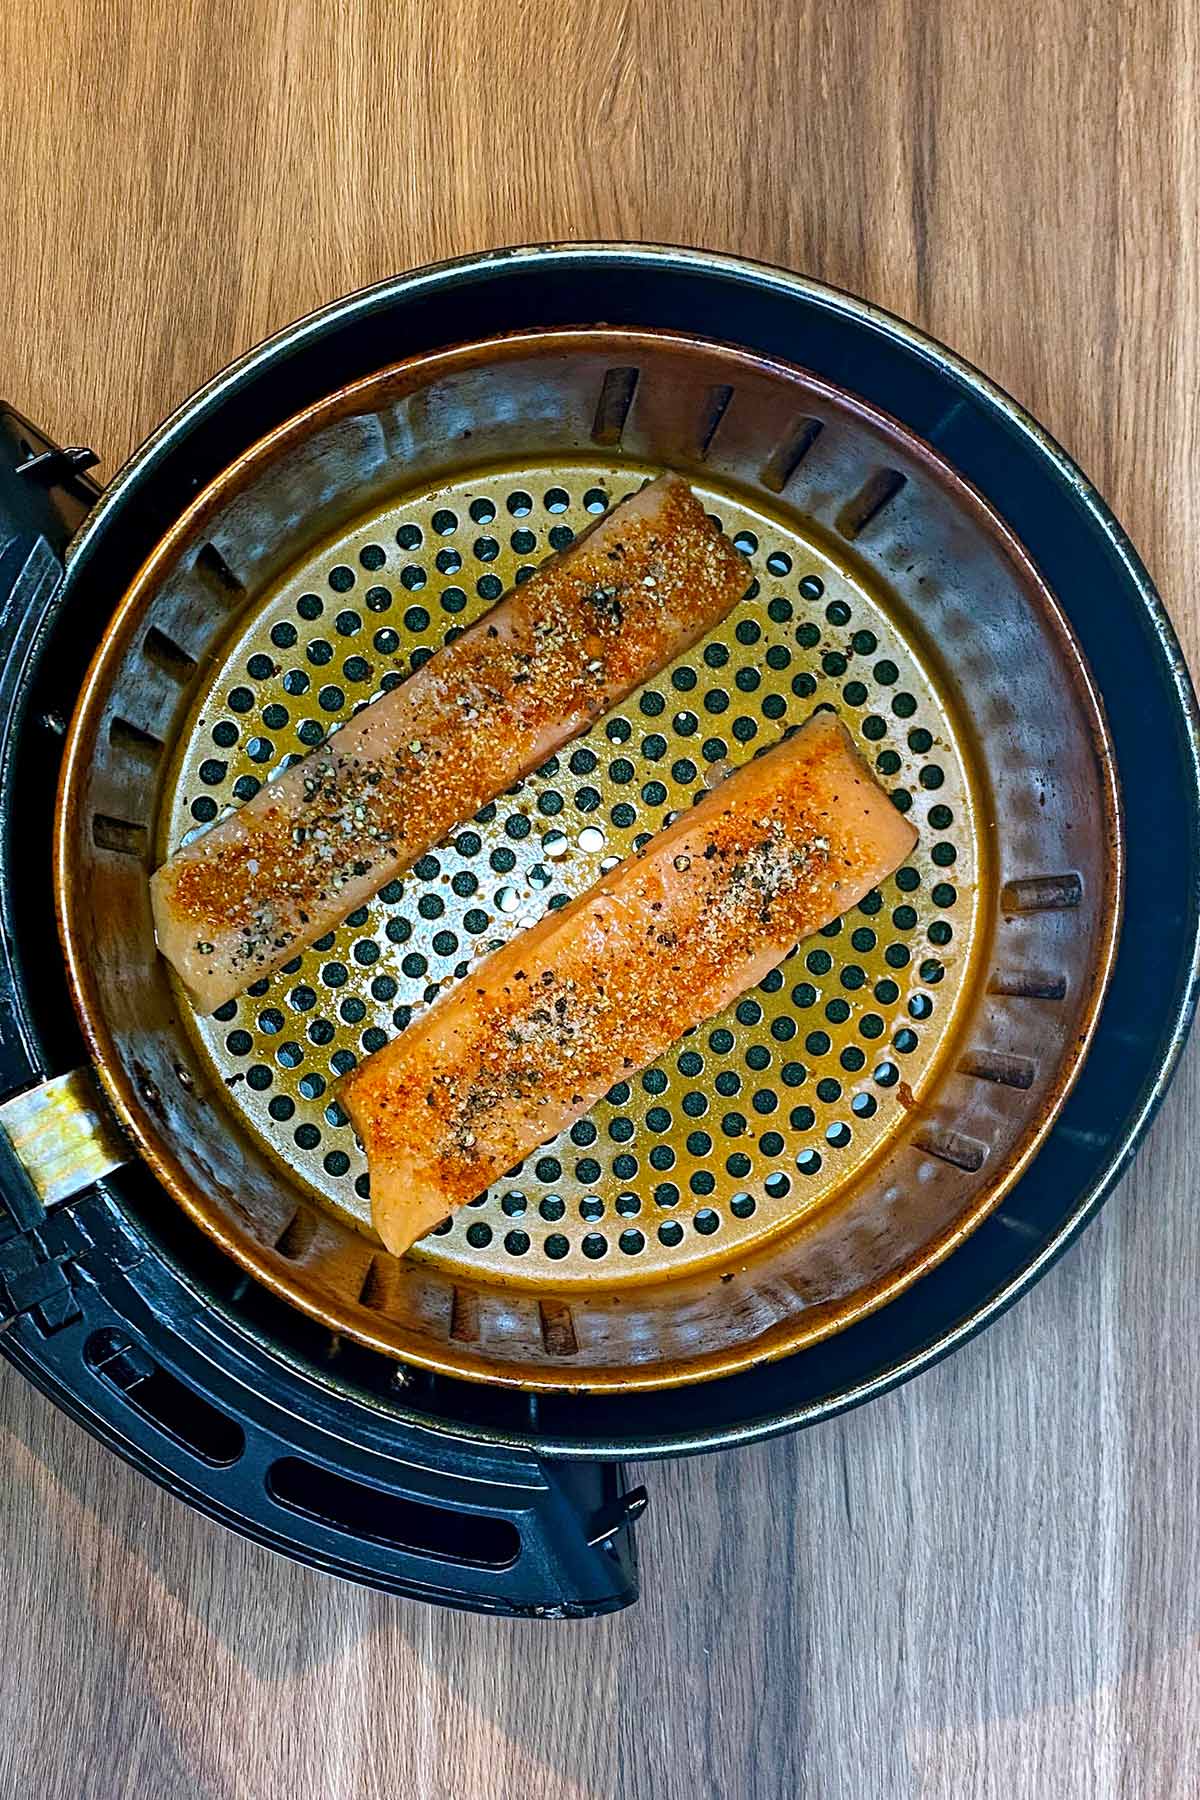 Salmon fillets in an air fryer basket.